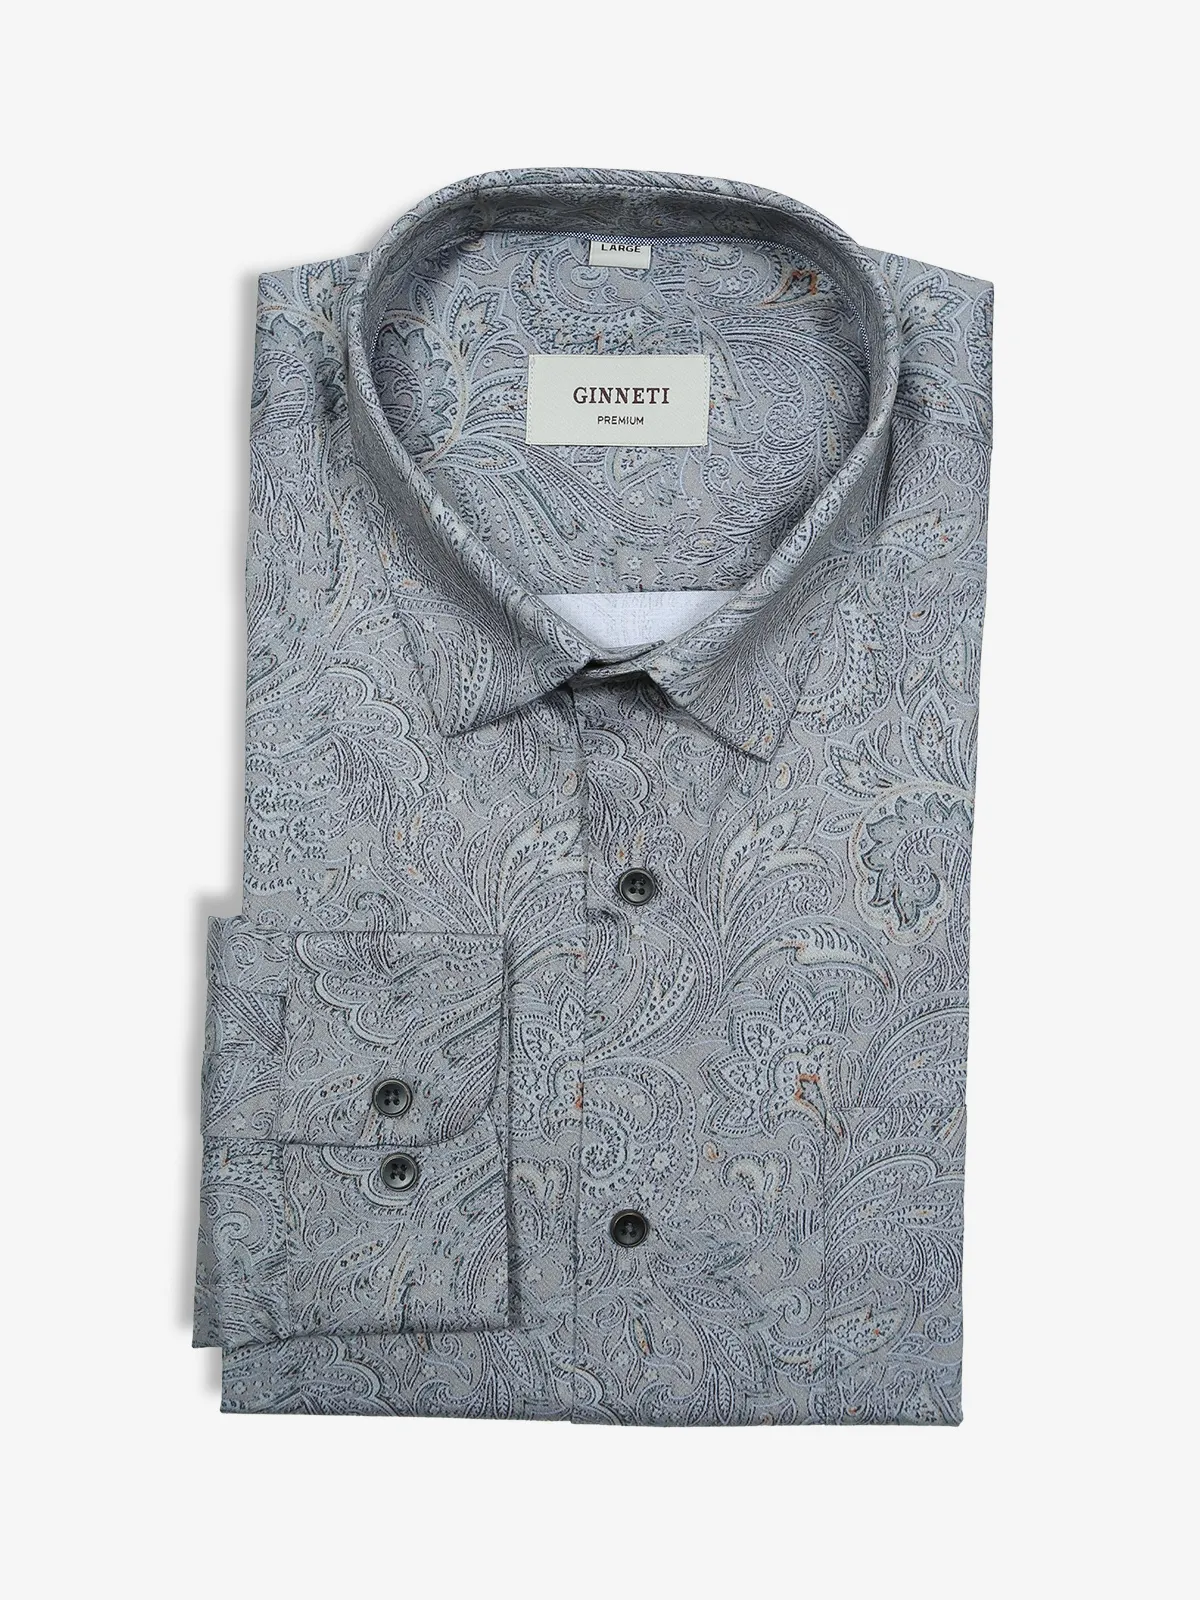 GINNETI grey printed cotton party shirt